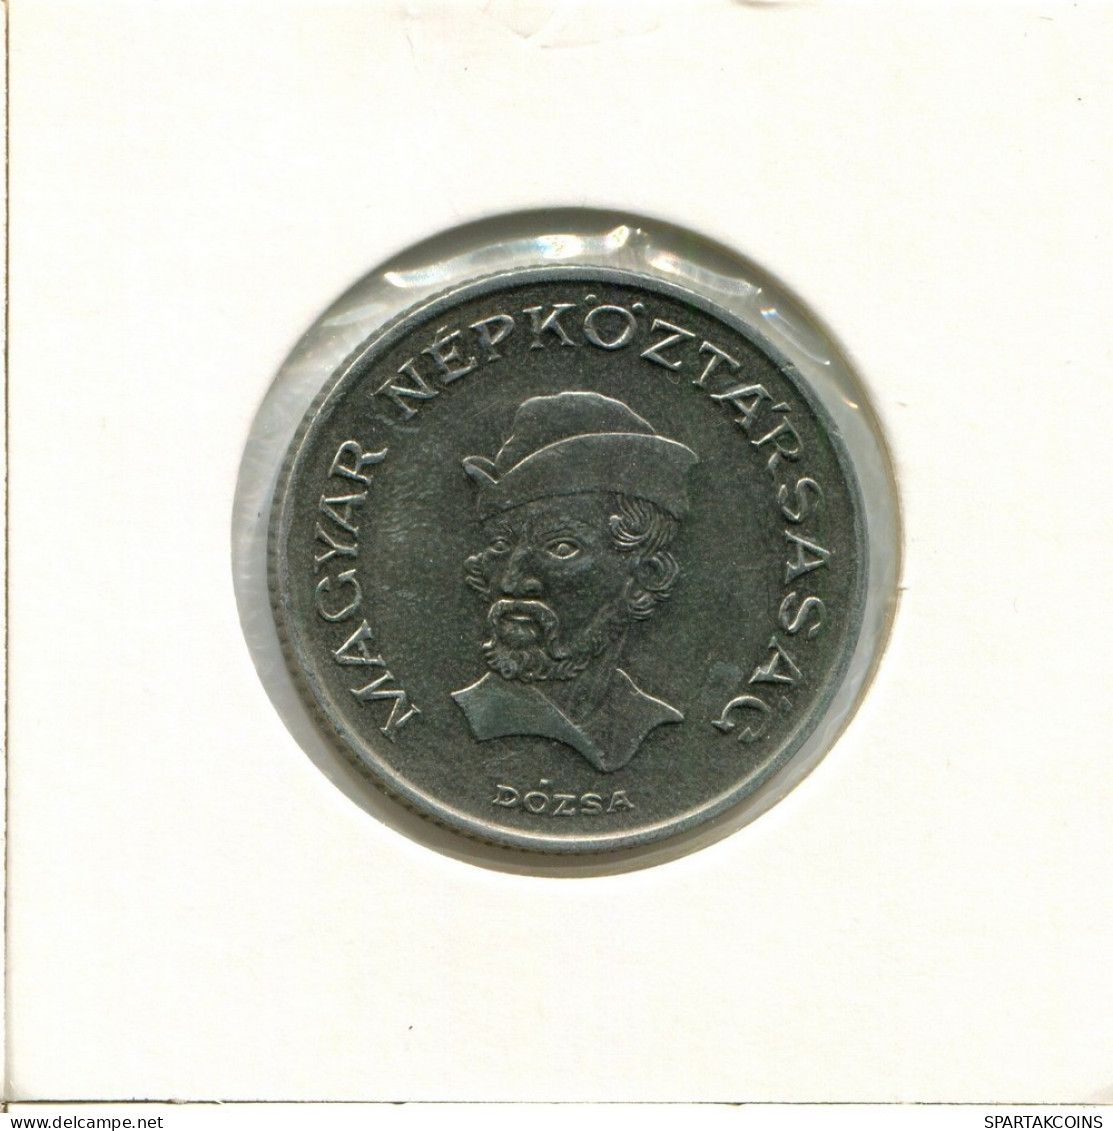 20 FORINT 1986 HUNGRÍA HUNGARY Moneda #AY532.E.A - Hongarije